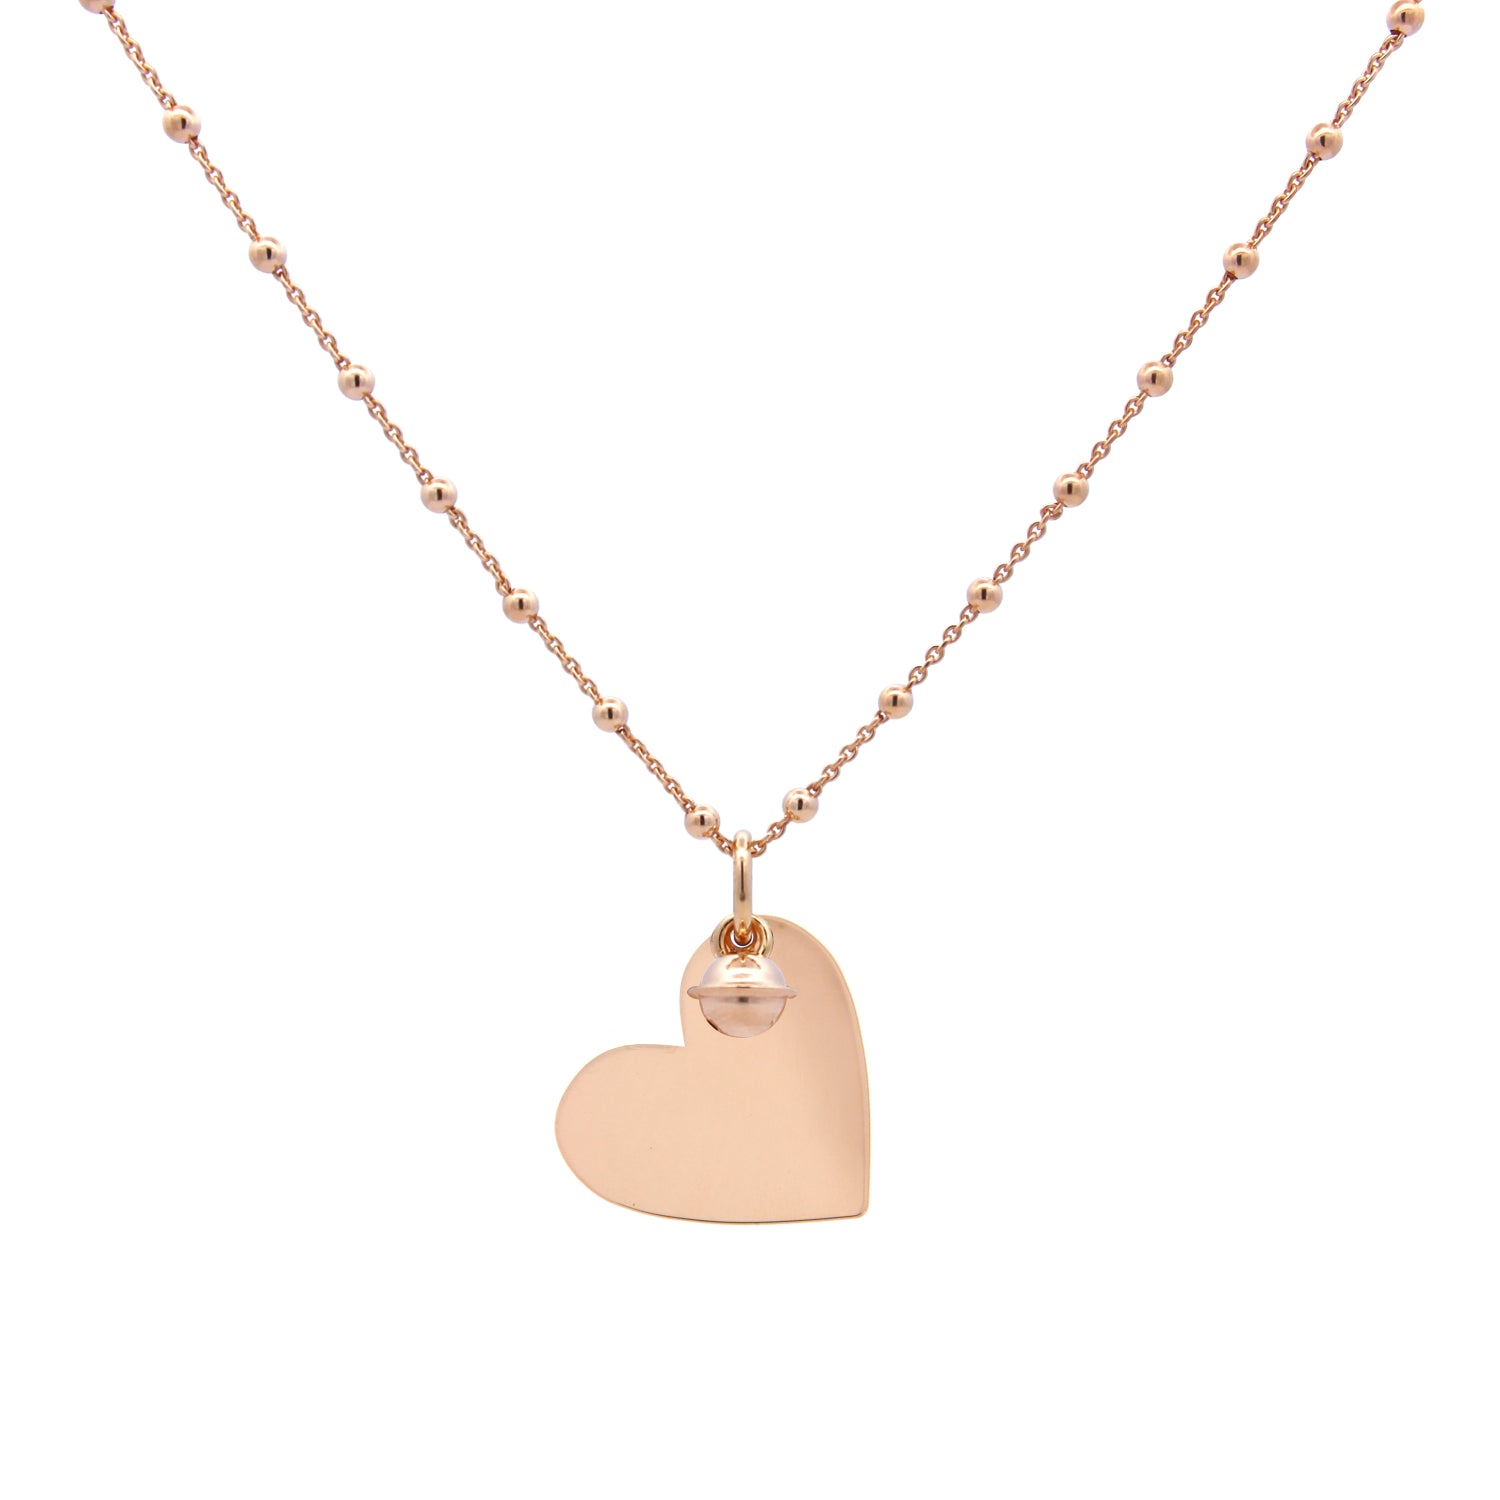 Necklaces - Beaded Necklace Heart Pendant - 2 | Rue des Mille